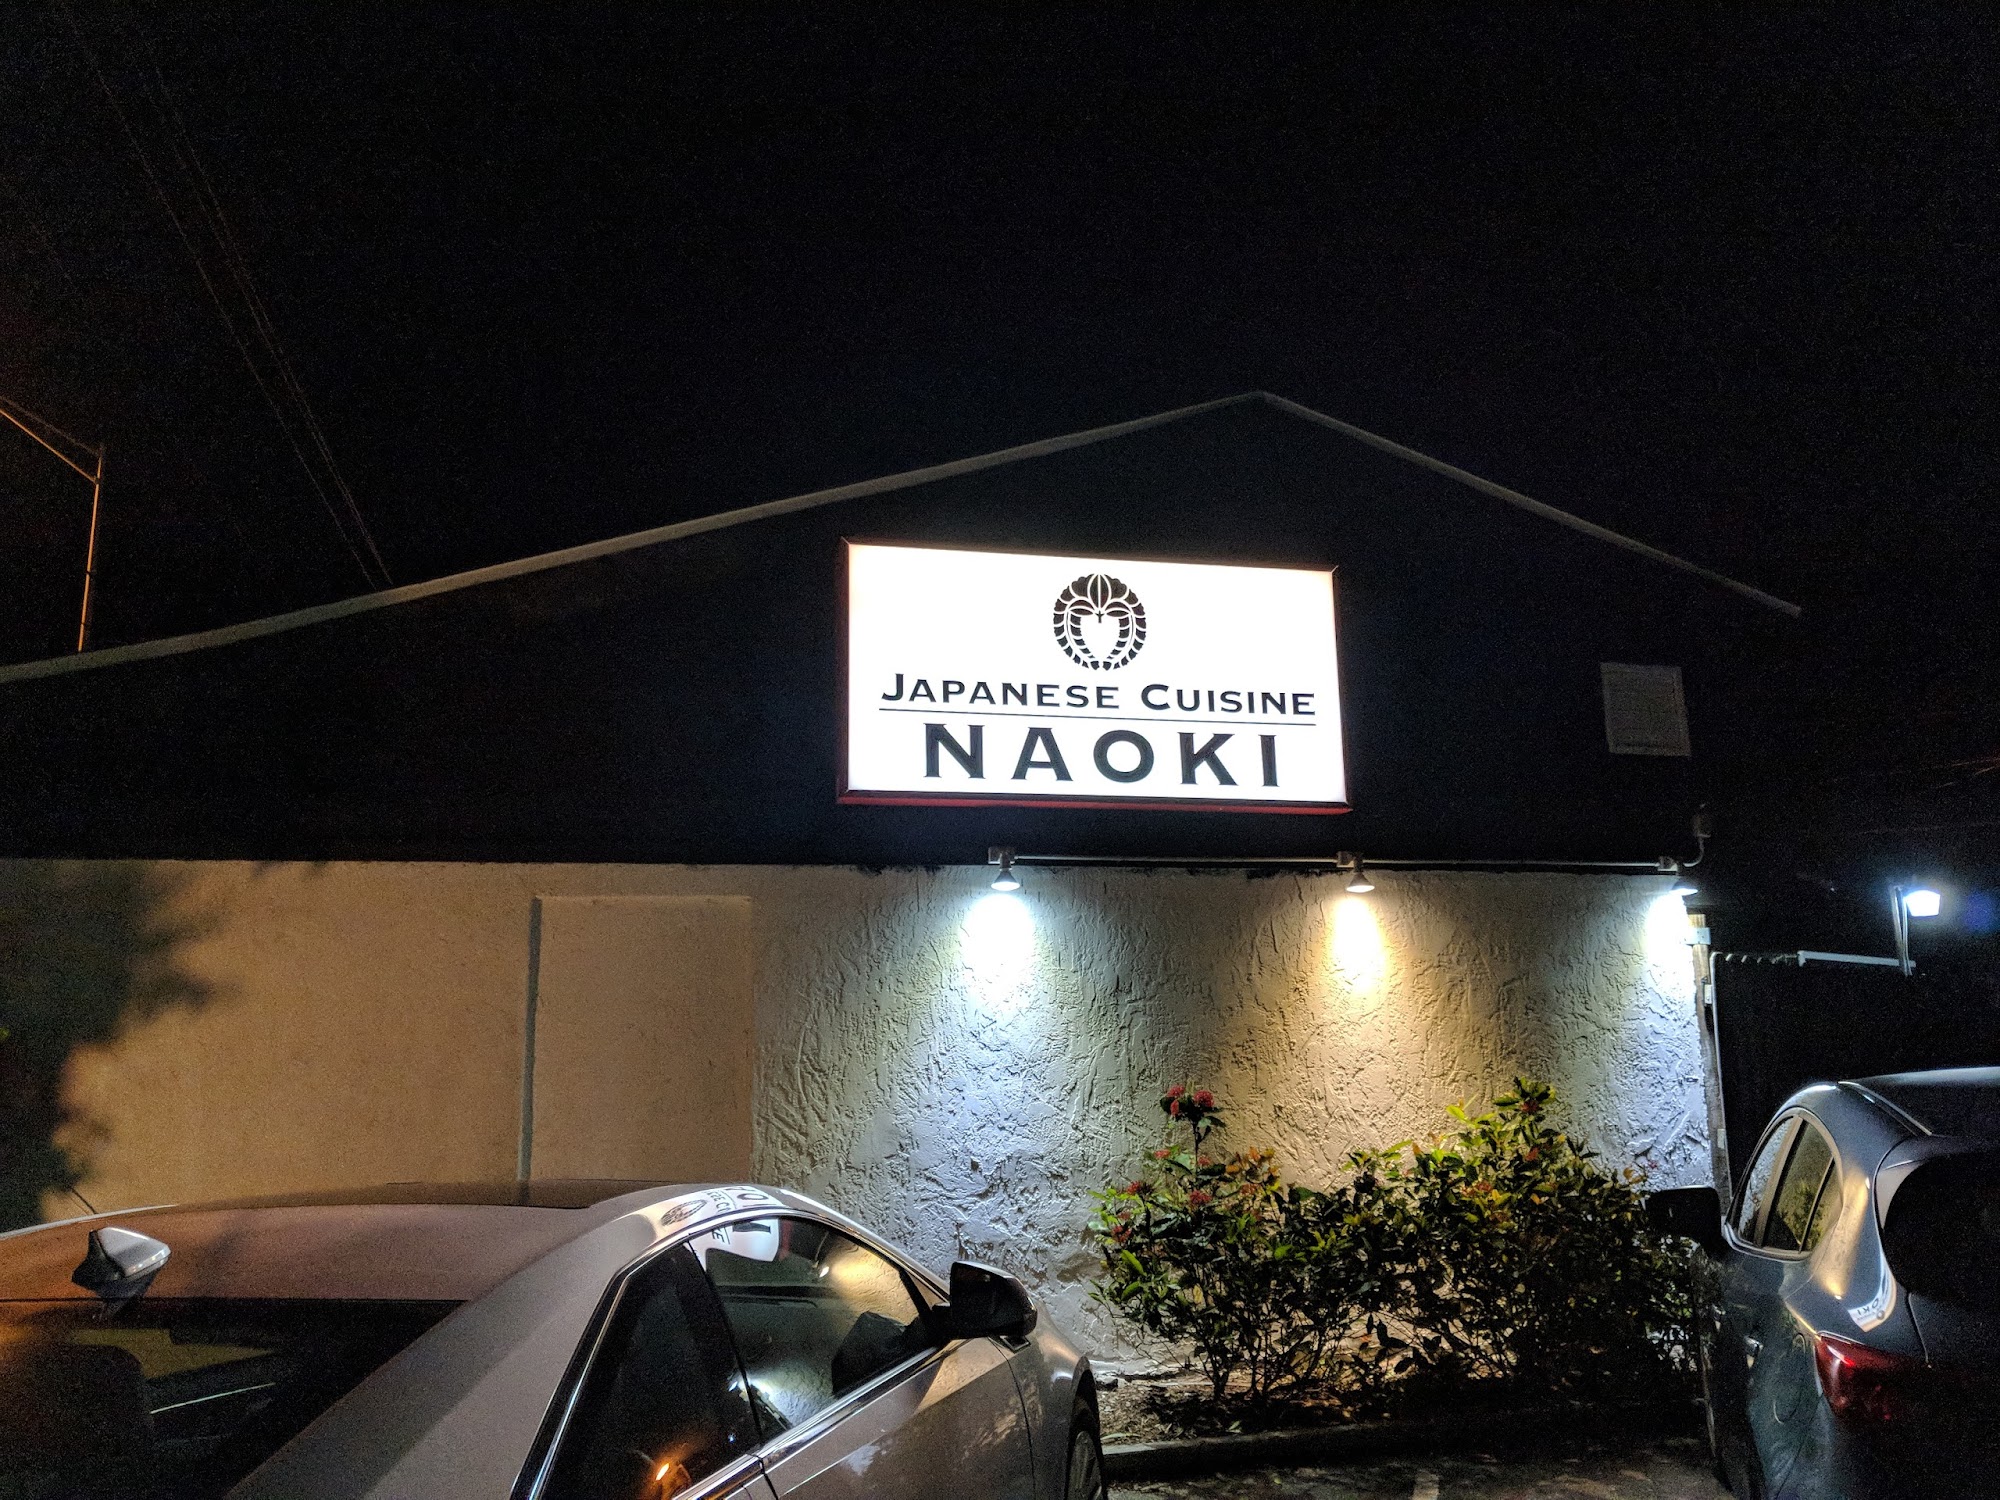 NAOKI JAPANESE CUISINE